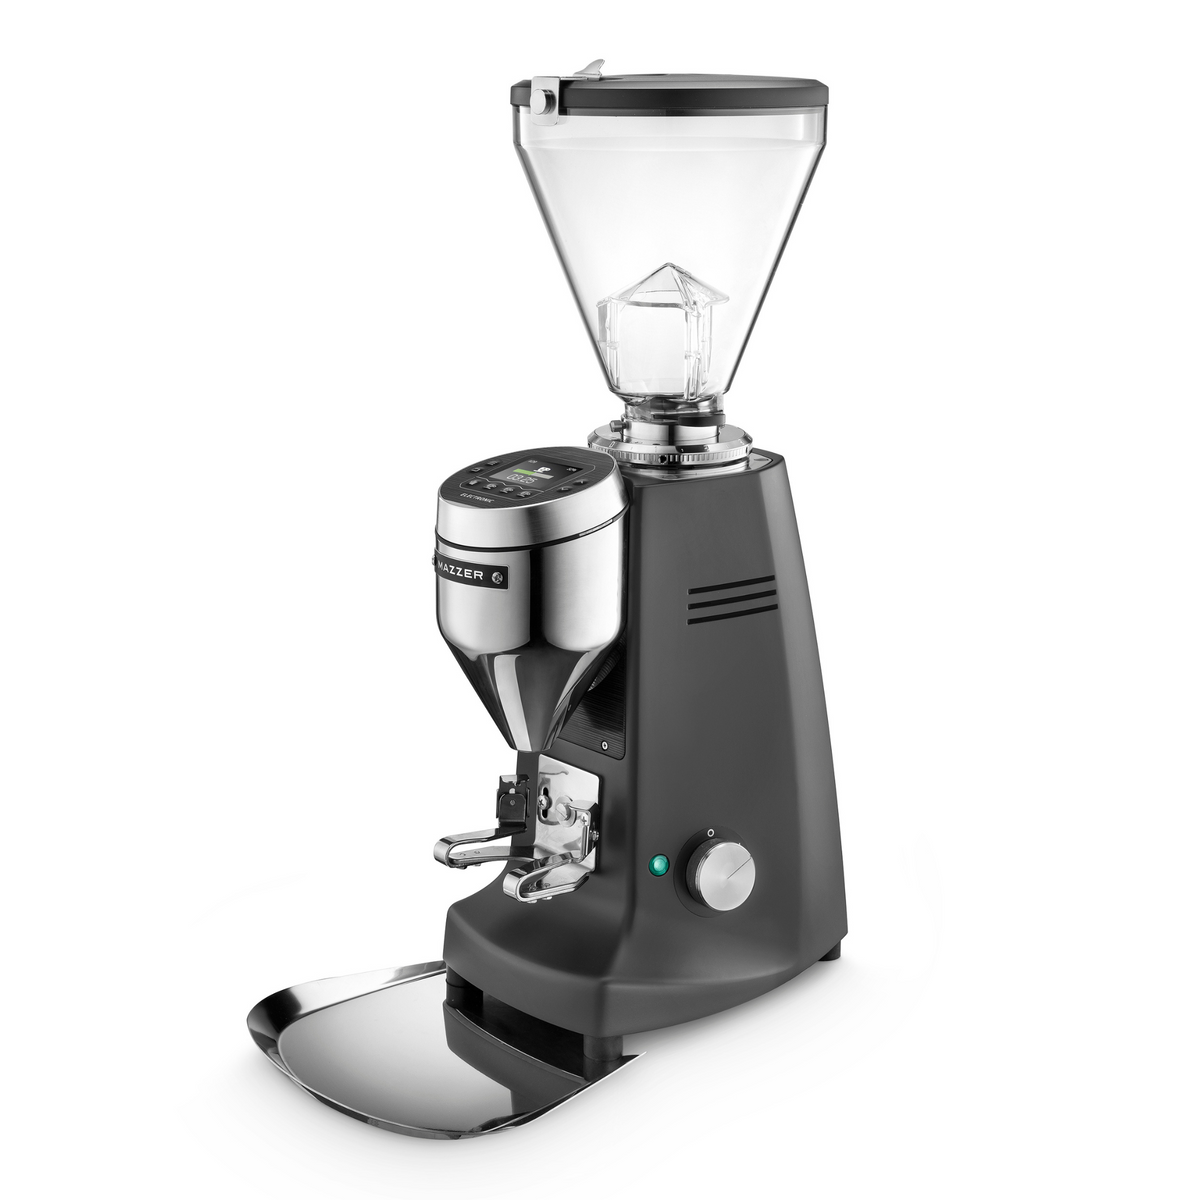 Mazzer Super Jolly V Pro 商用浓缩咖啡研磨机